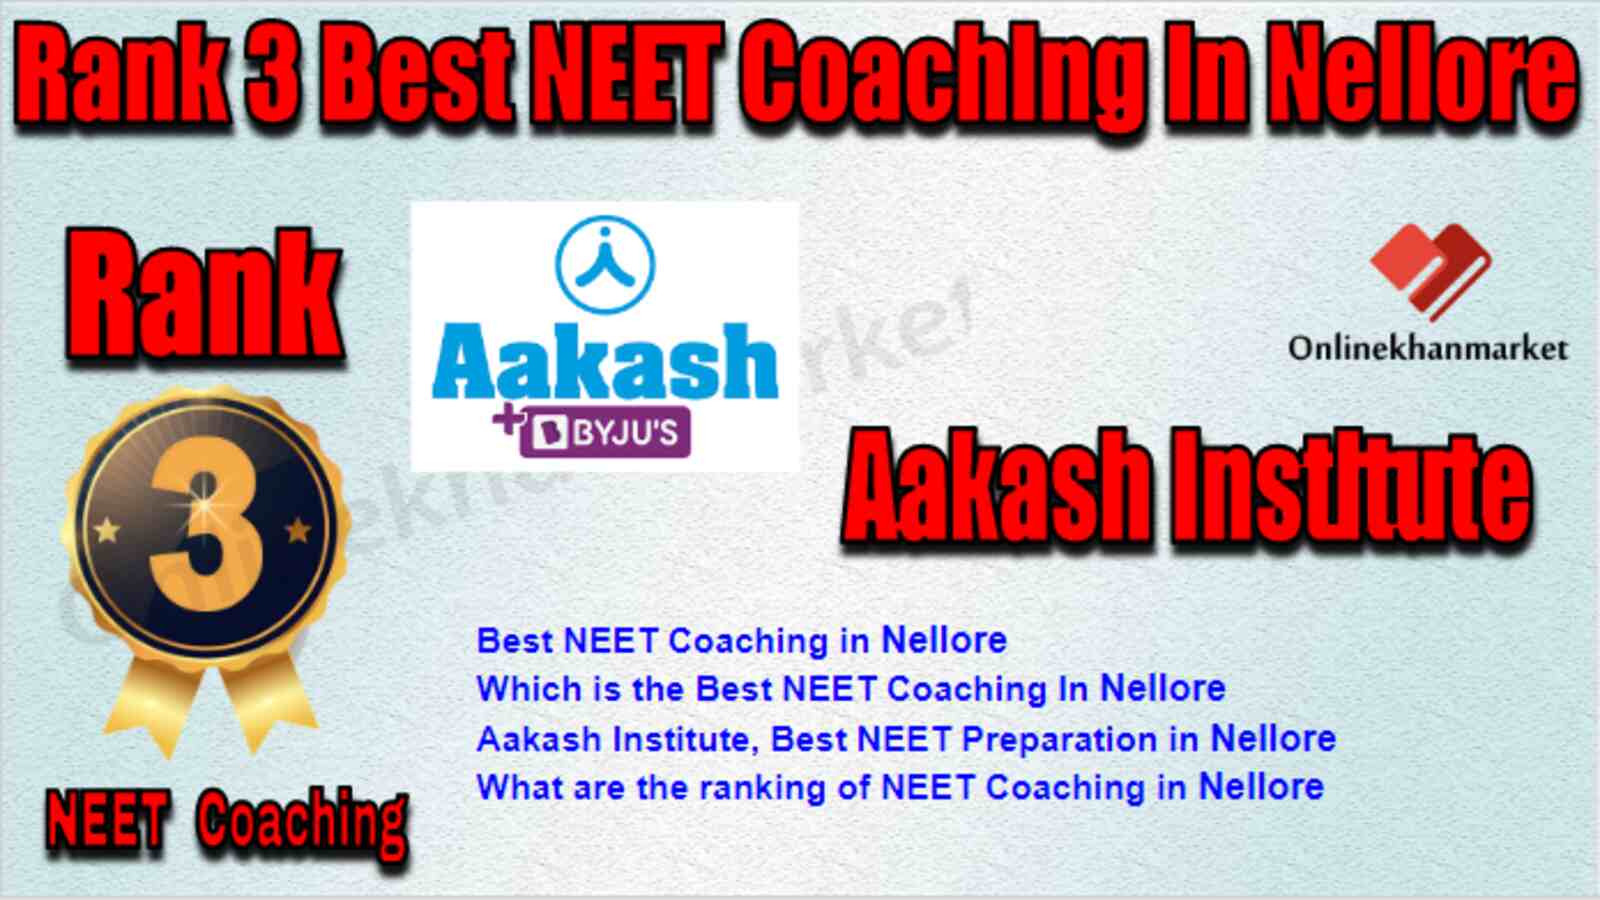 Rank 3 Best NEET Coaching in Nellore